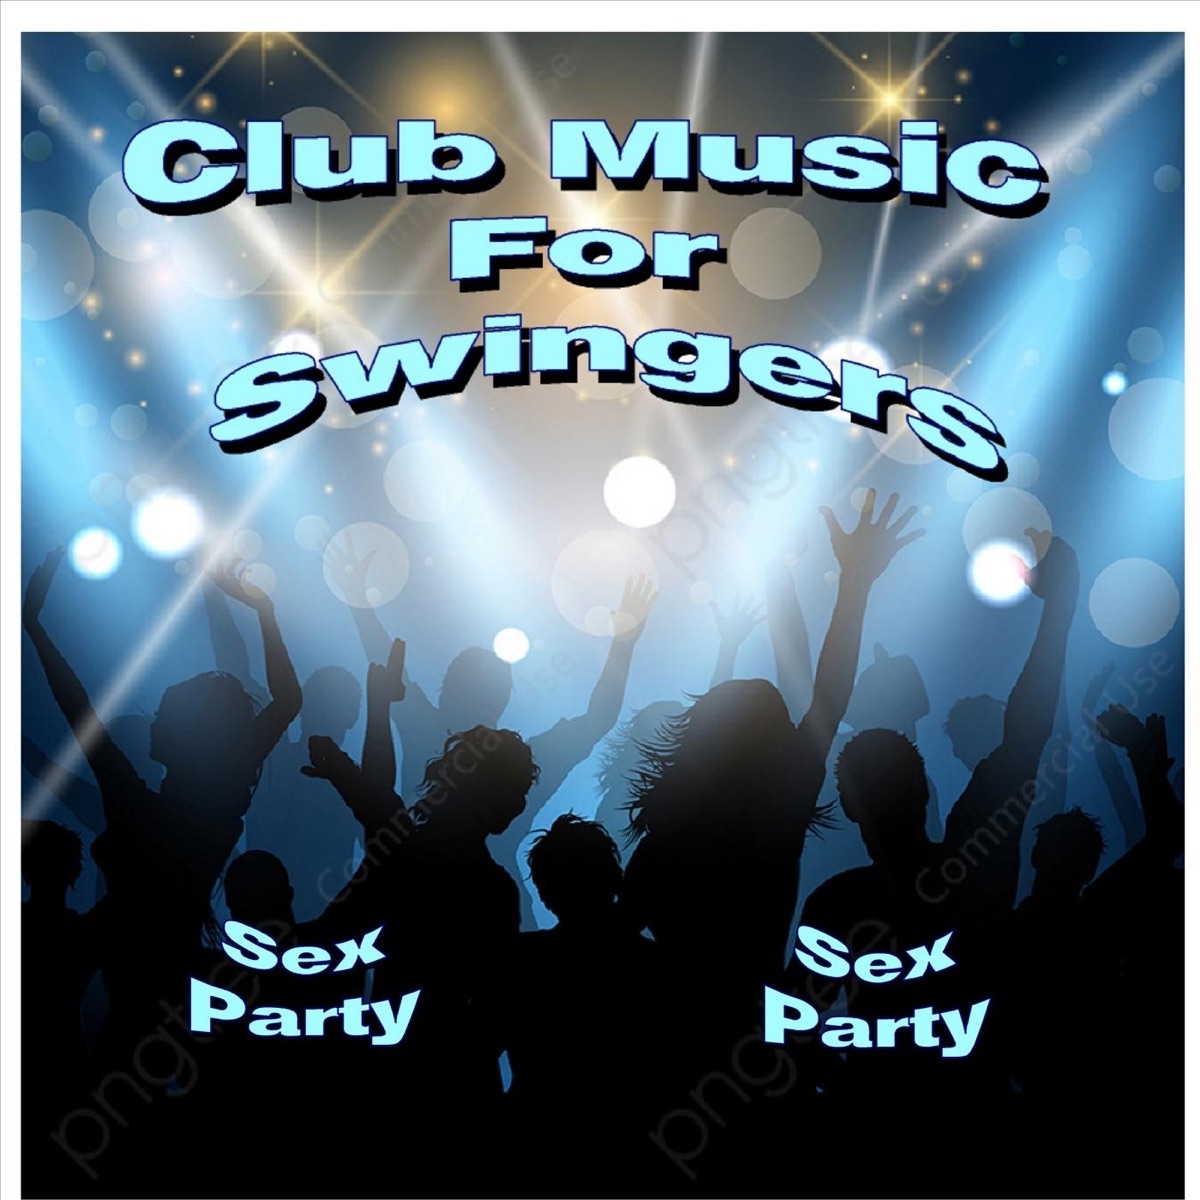 Club Music for Swingers Sex Party - Album by Triplexxxsounds picture photo image